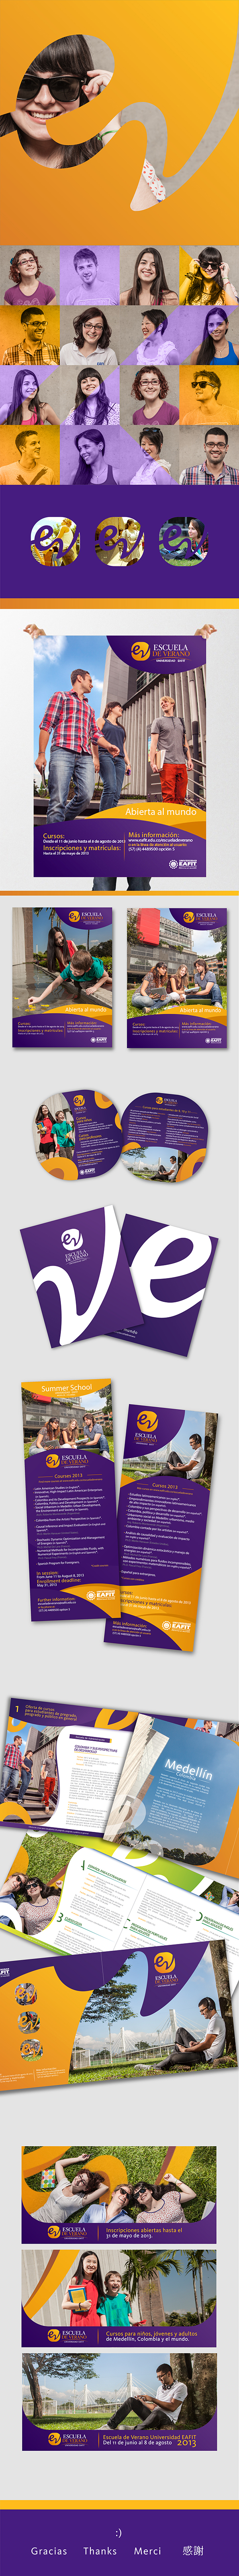 logo EAFIT Universidad EAFIT rayanegra rayanegra diseño visual escuela de verano purple orange naranja morado Logotype summer